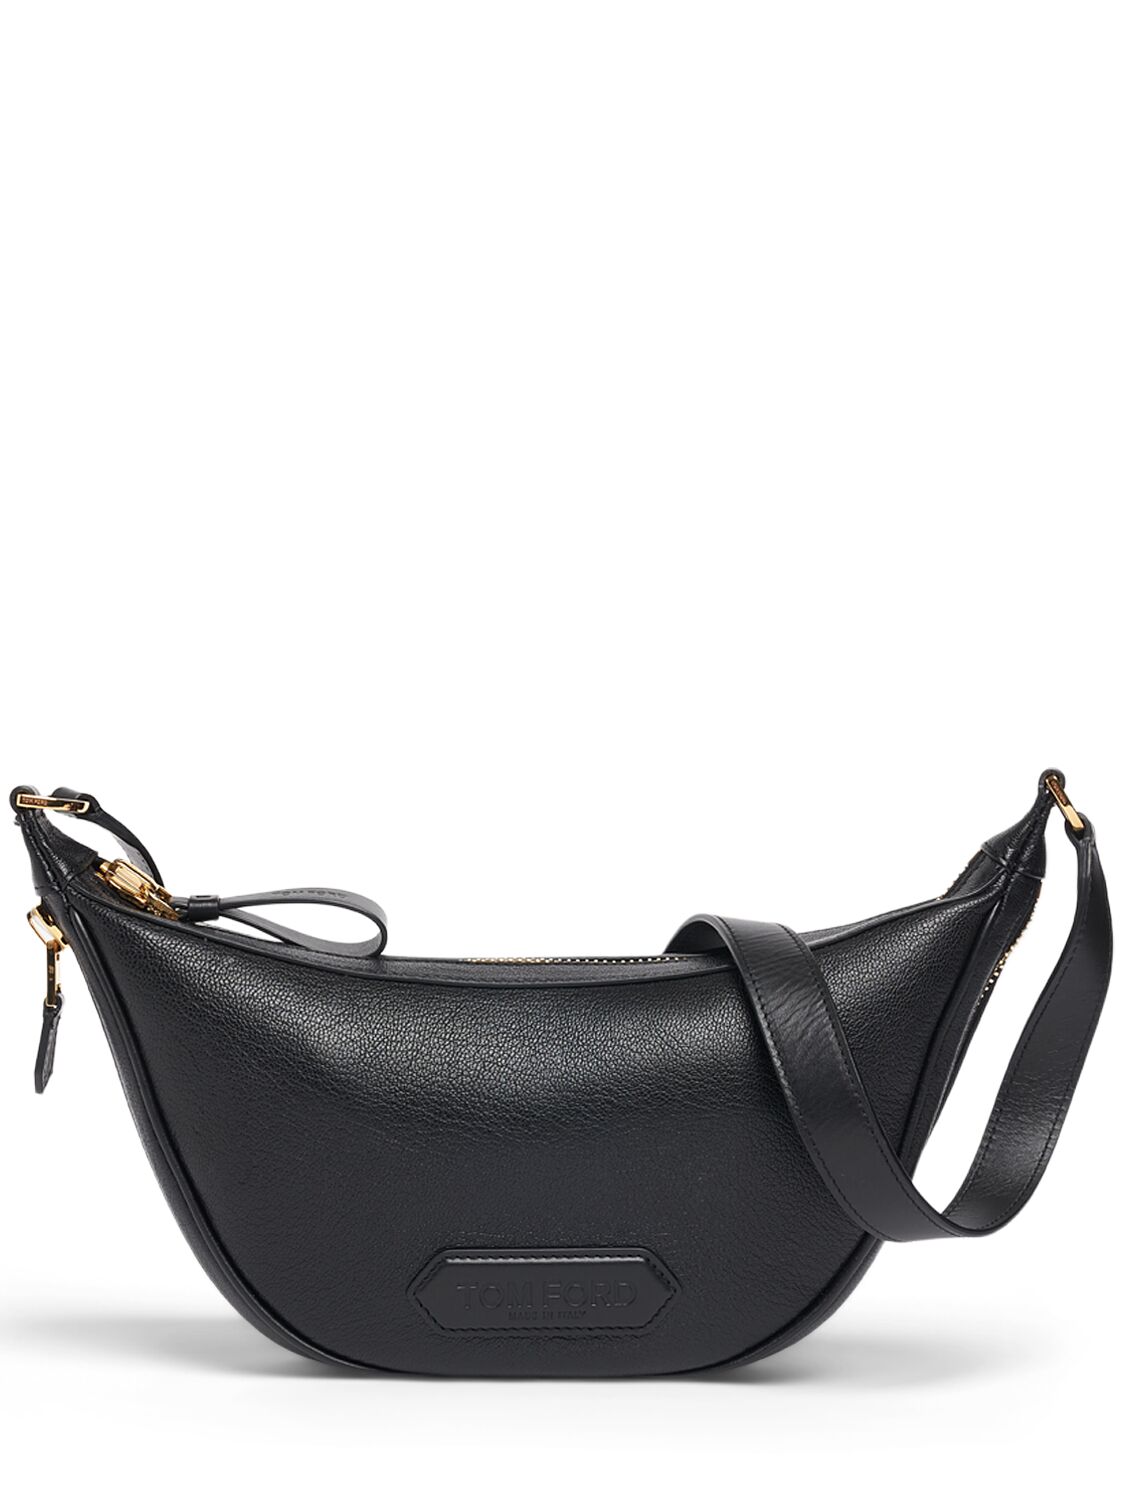 Tom Ford Zip Line Shiny Leather Messenger Bag In Black